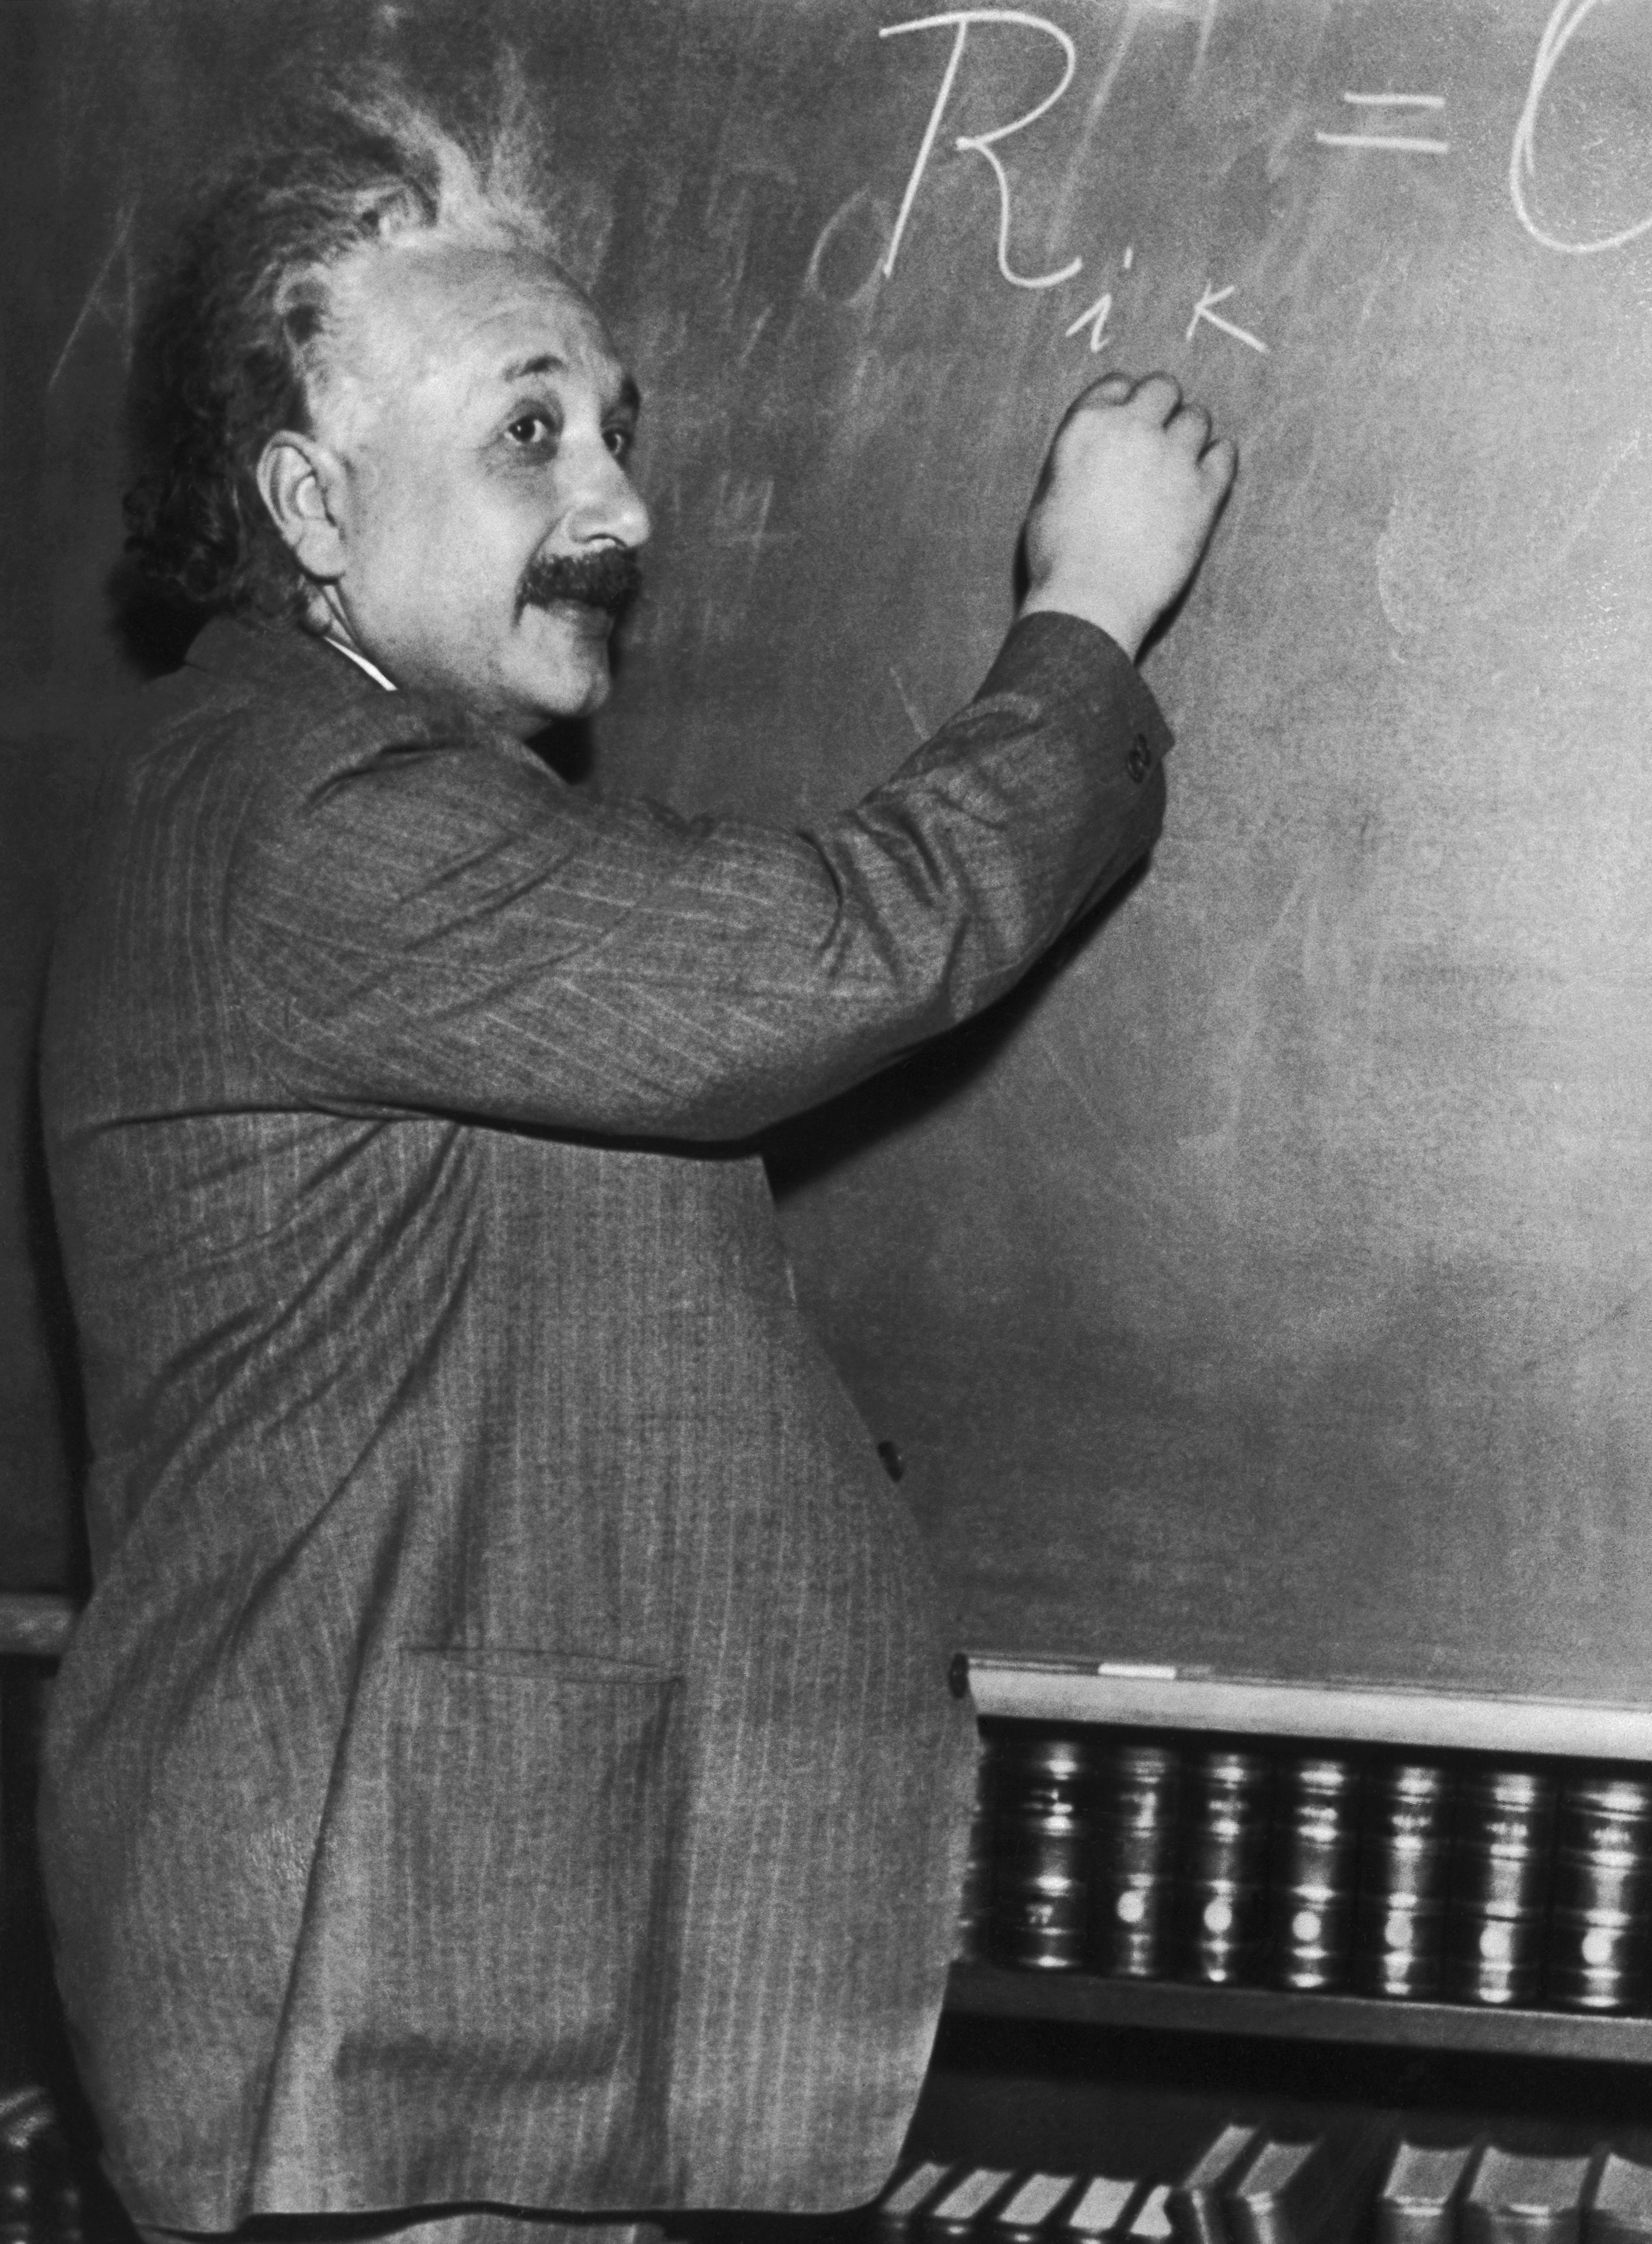 Albert Einstein demonstrates mathematical formulas on a blackboard in front of California scientists.